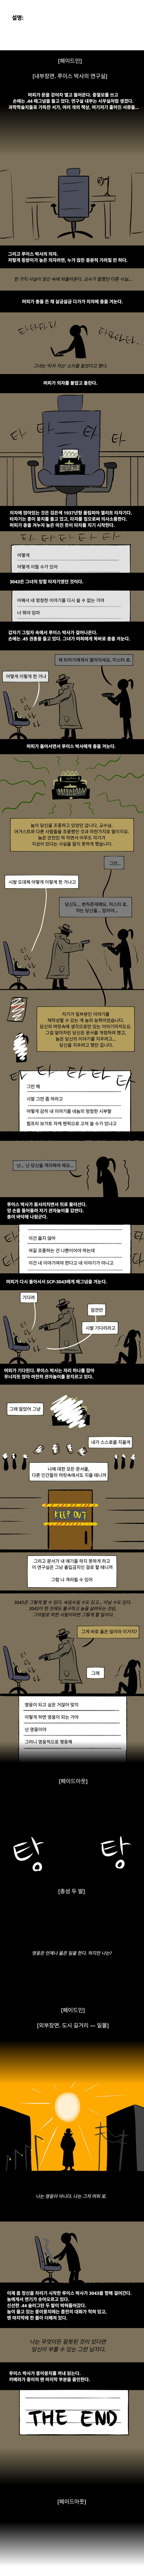 SCP재단] SCP-1733 : 시즌 개막전.manhwa